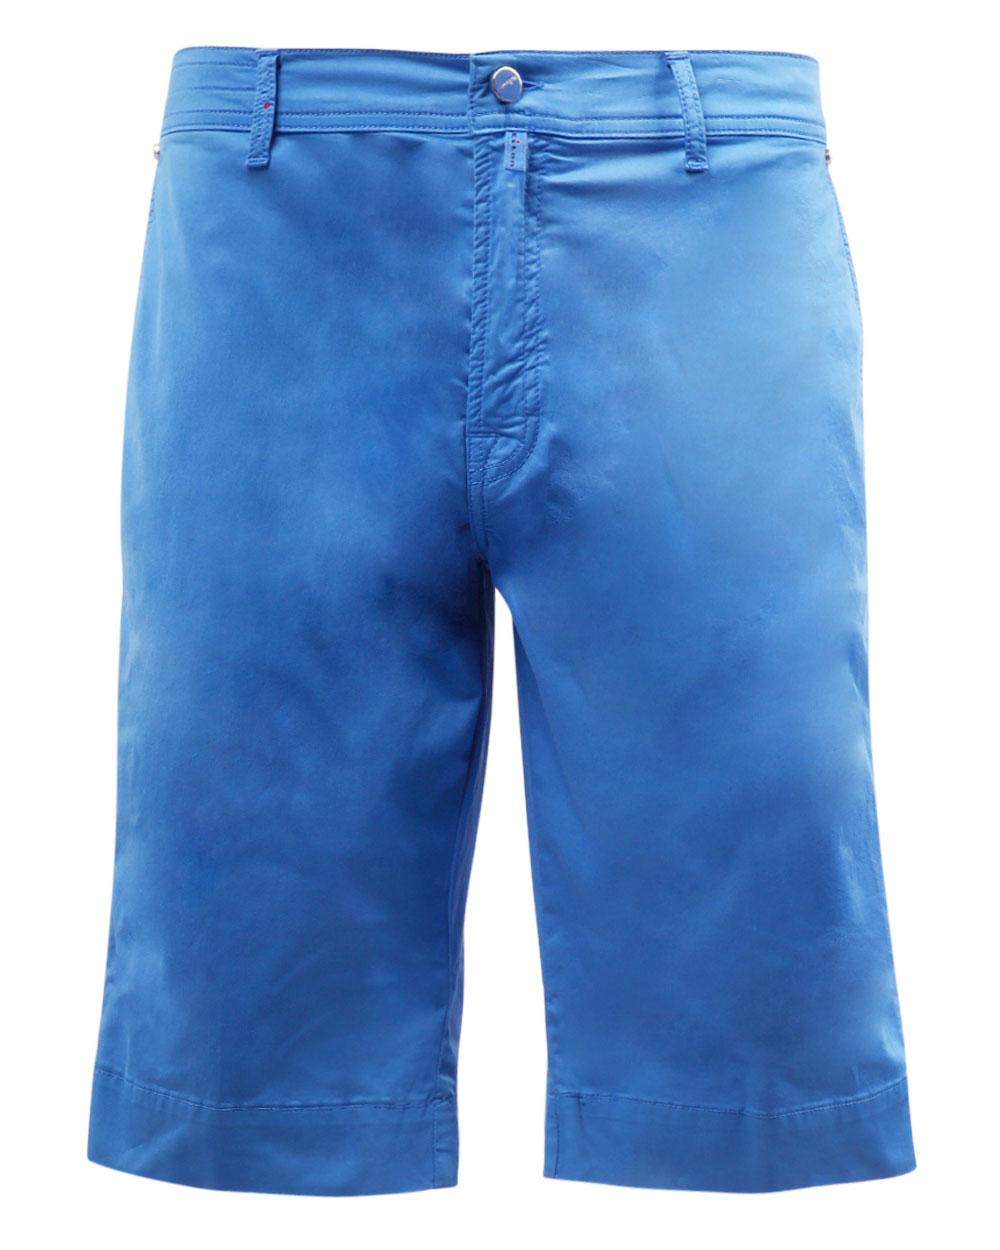 Electric Blue Cotton Shorts